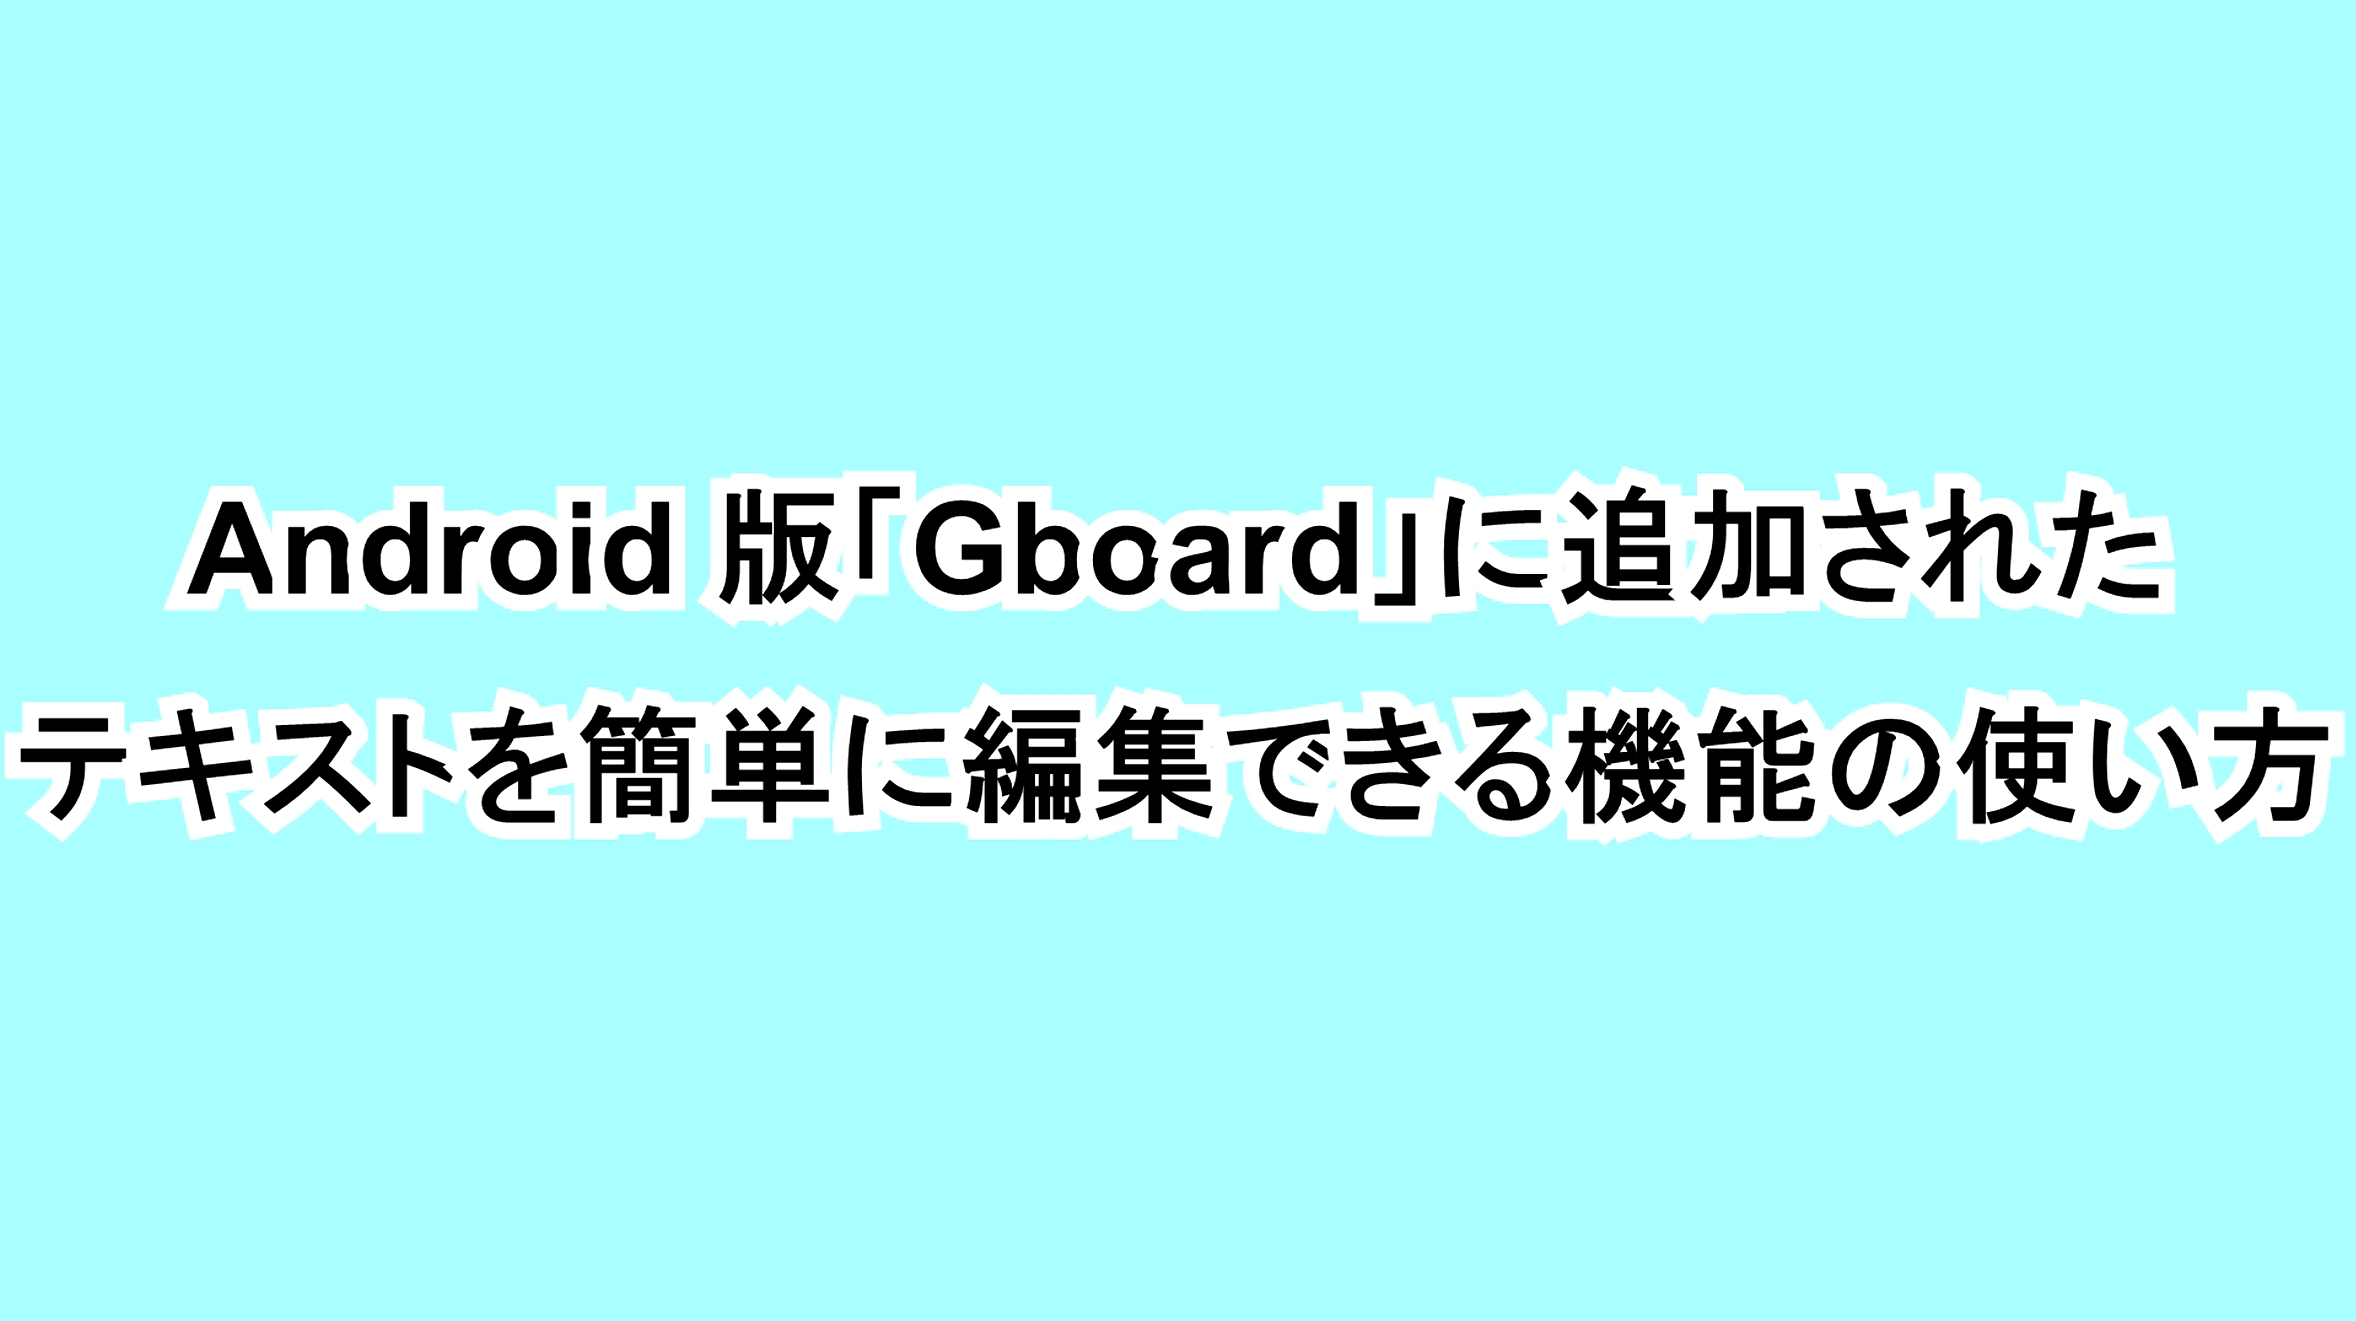 Android版「Gboard」に追加されたテキストを簡単に編集できる機能の使い方